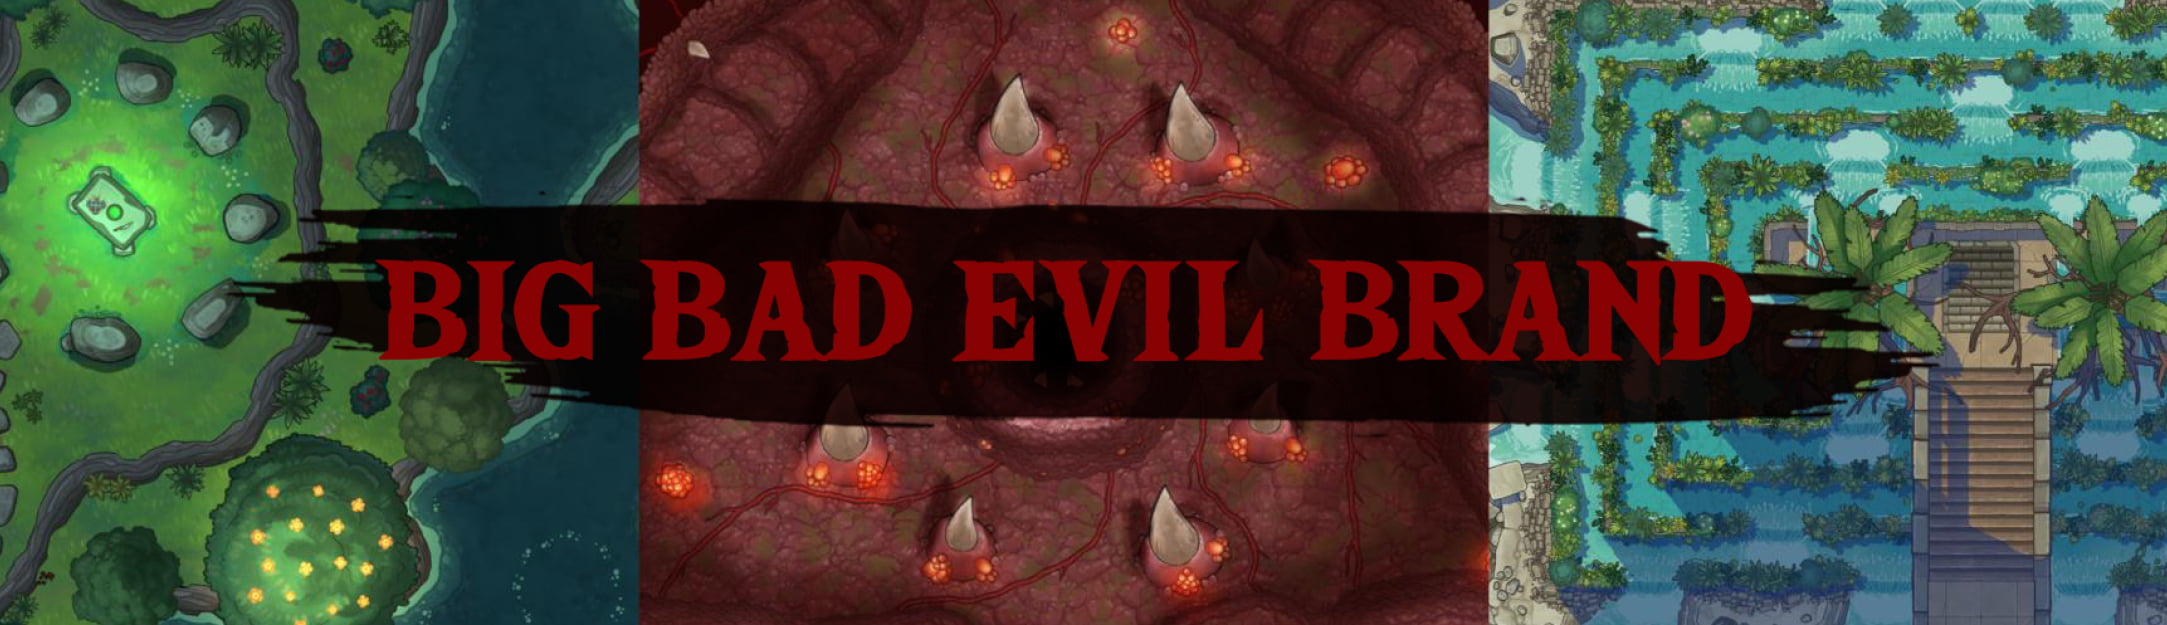 Big Bad Evil Brand